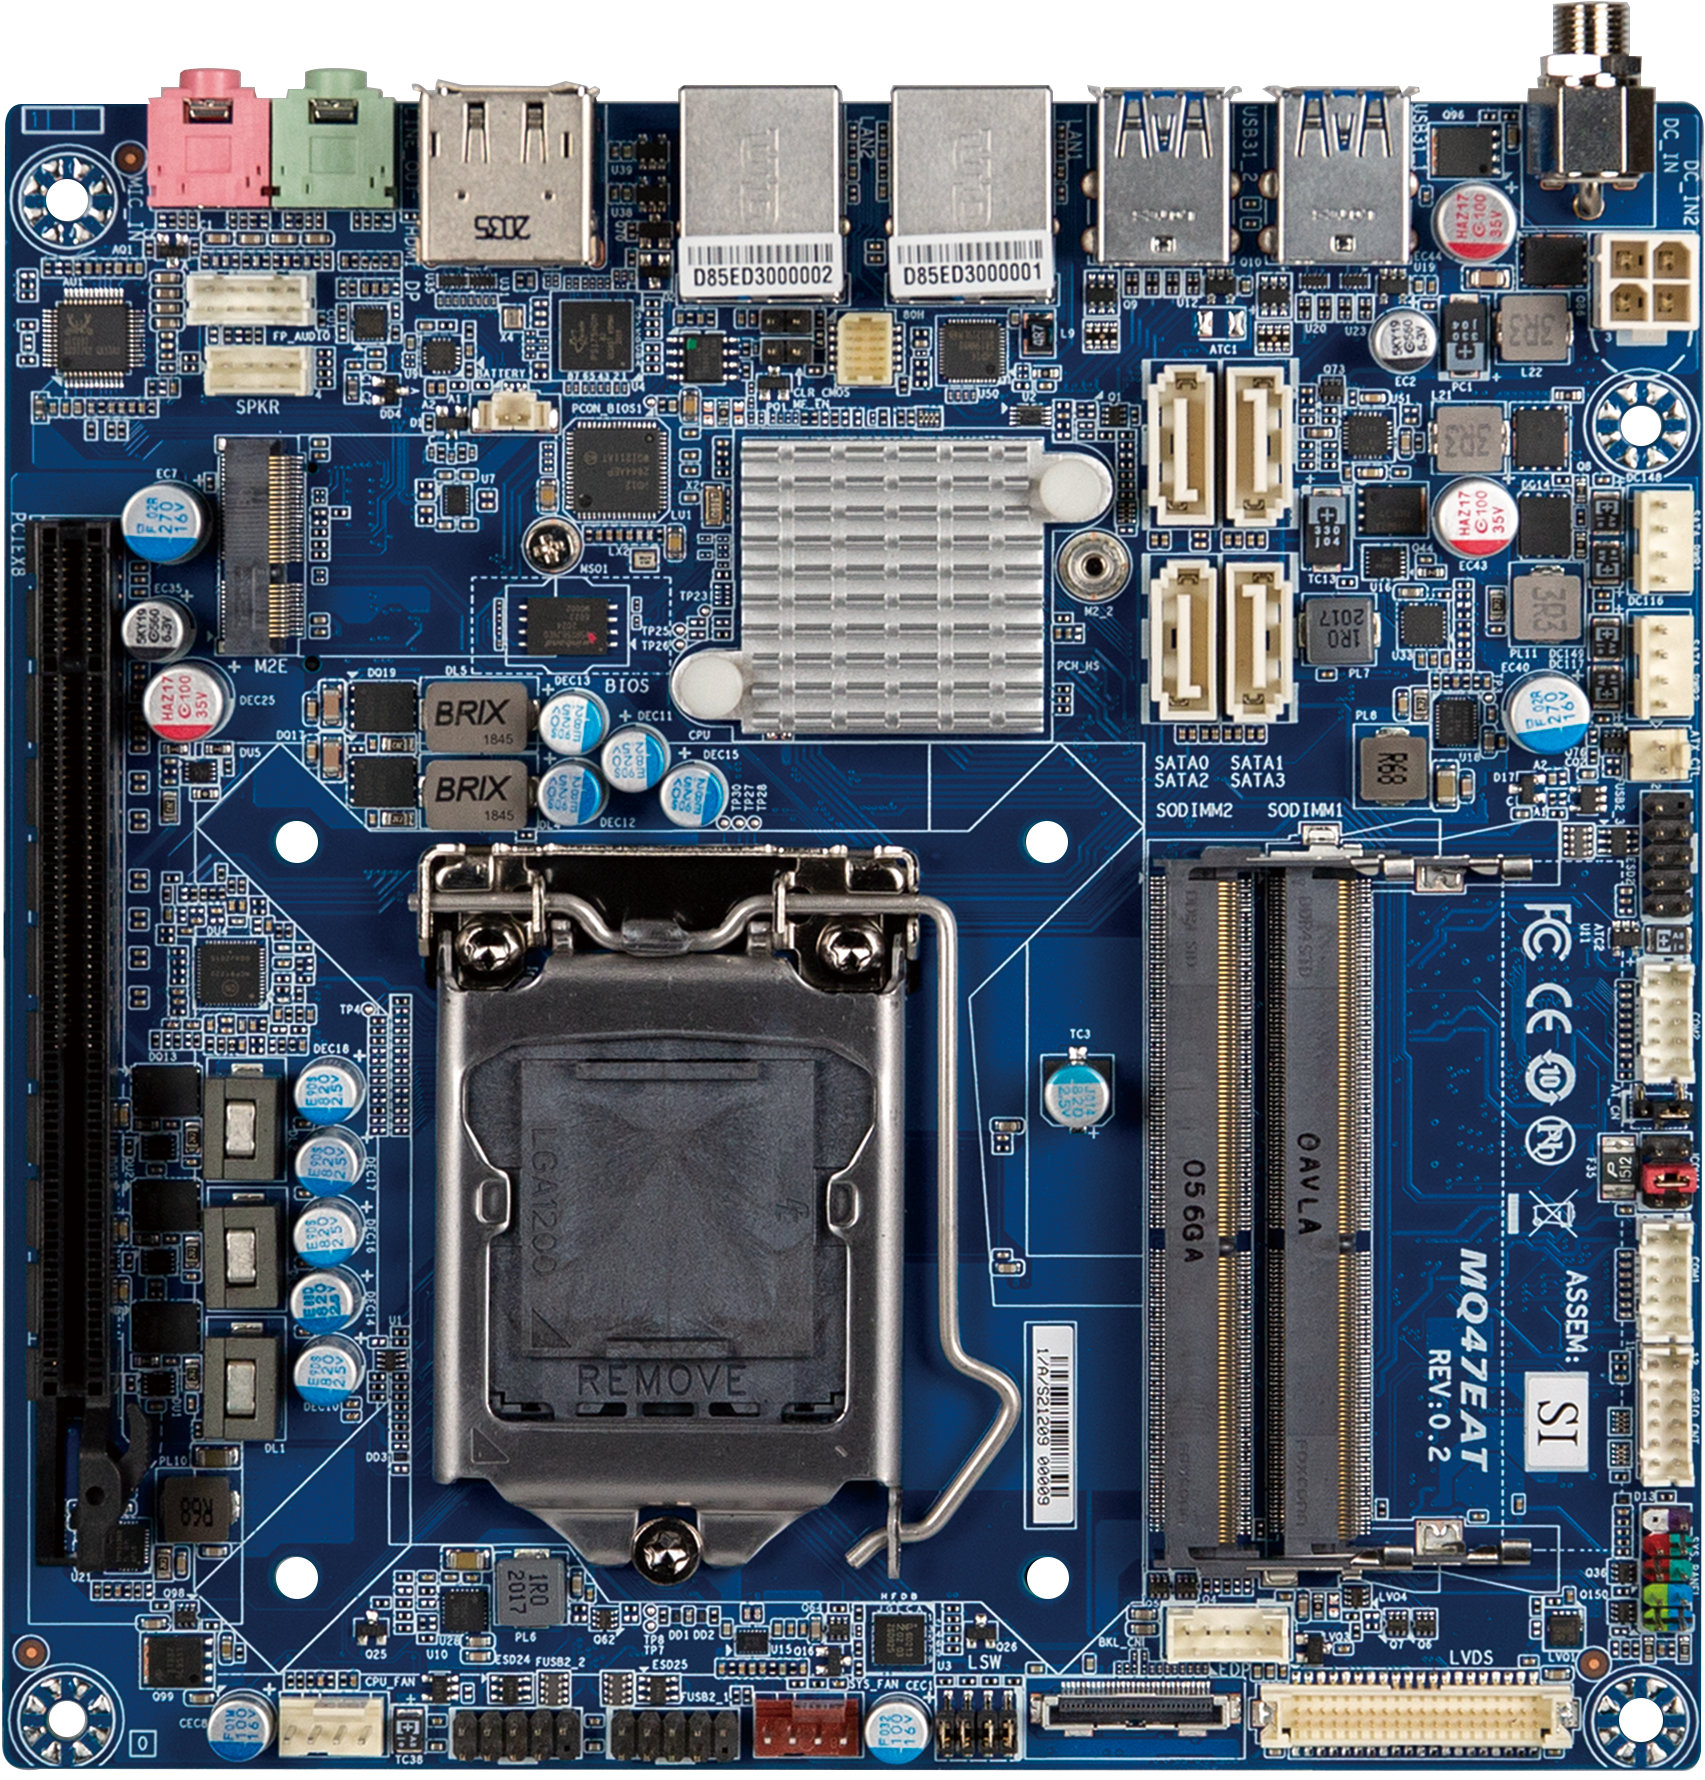 iTXL-Q47EA - Thin Mini-ITX Motherboard - Global American